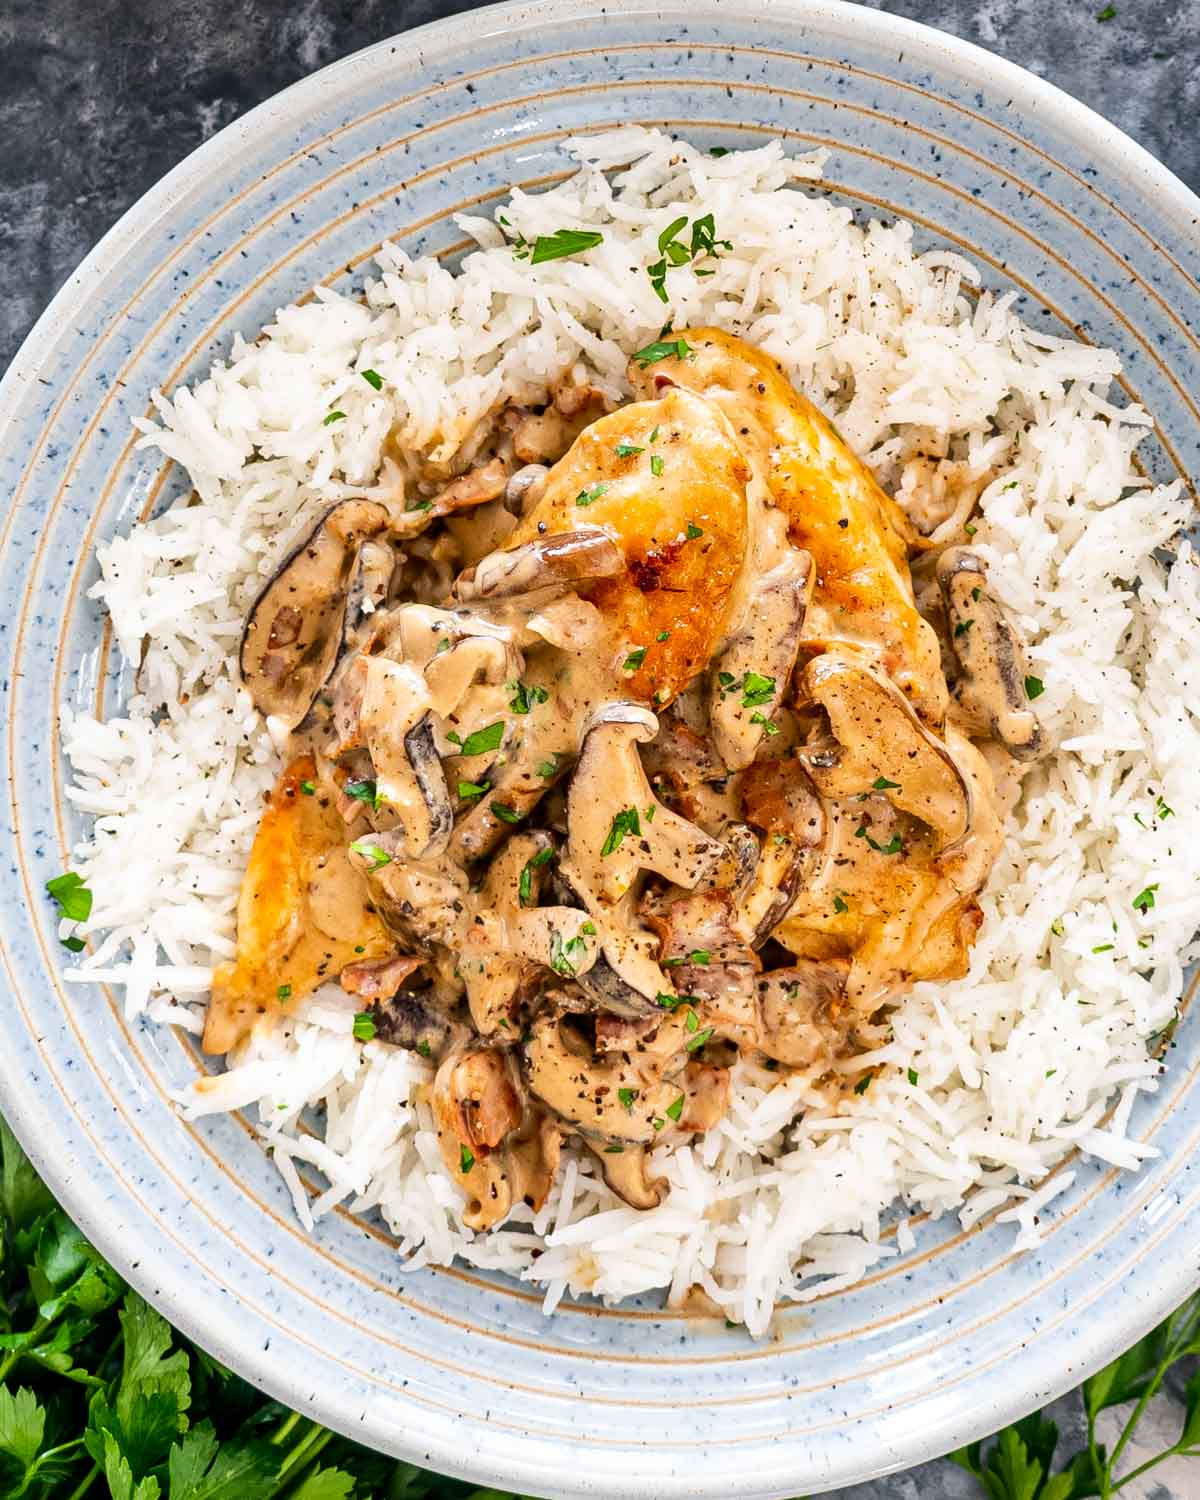 chicken marsala with a creamy mushroom sauce over rice.